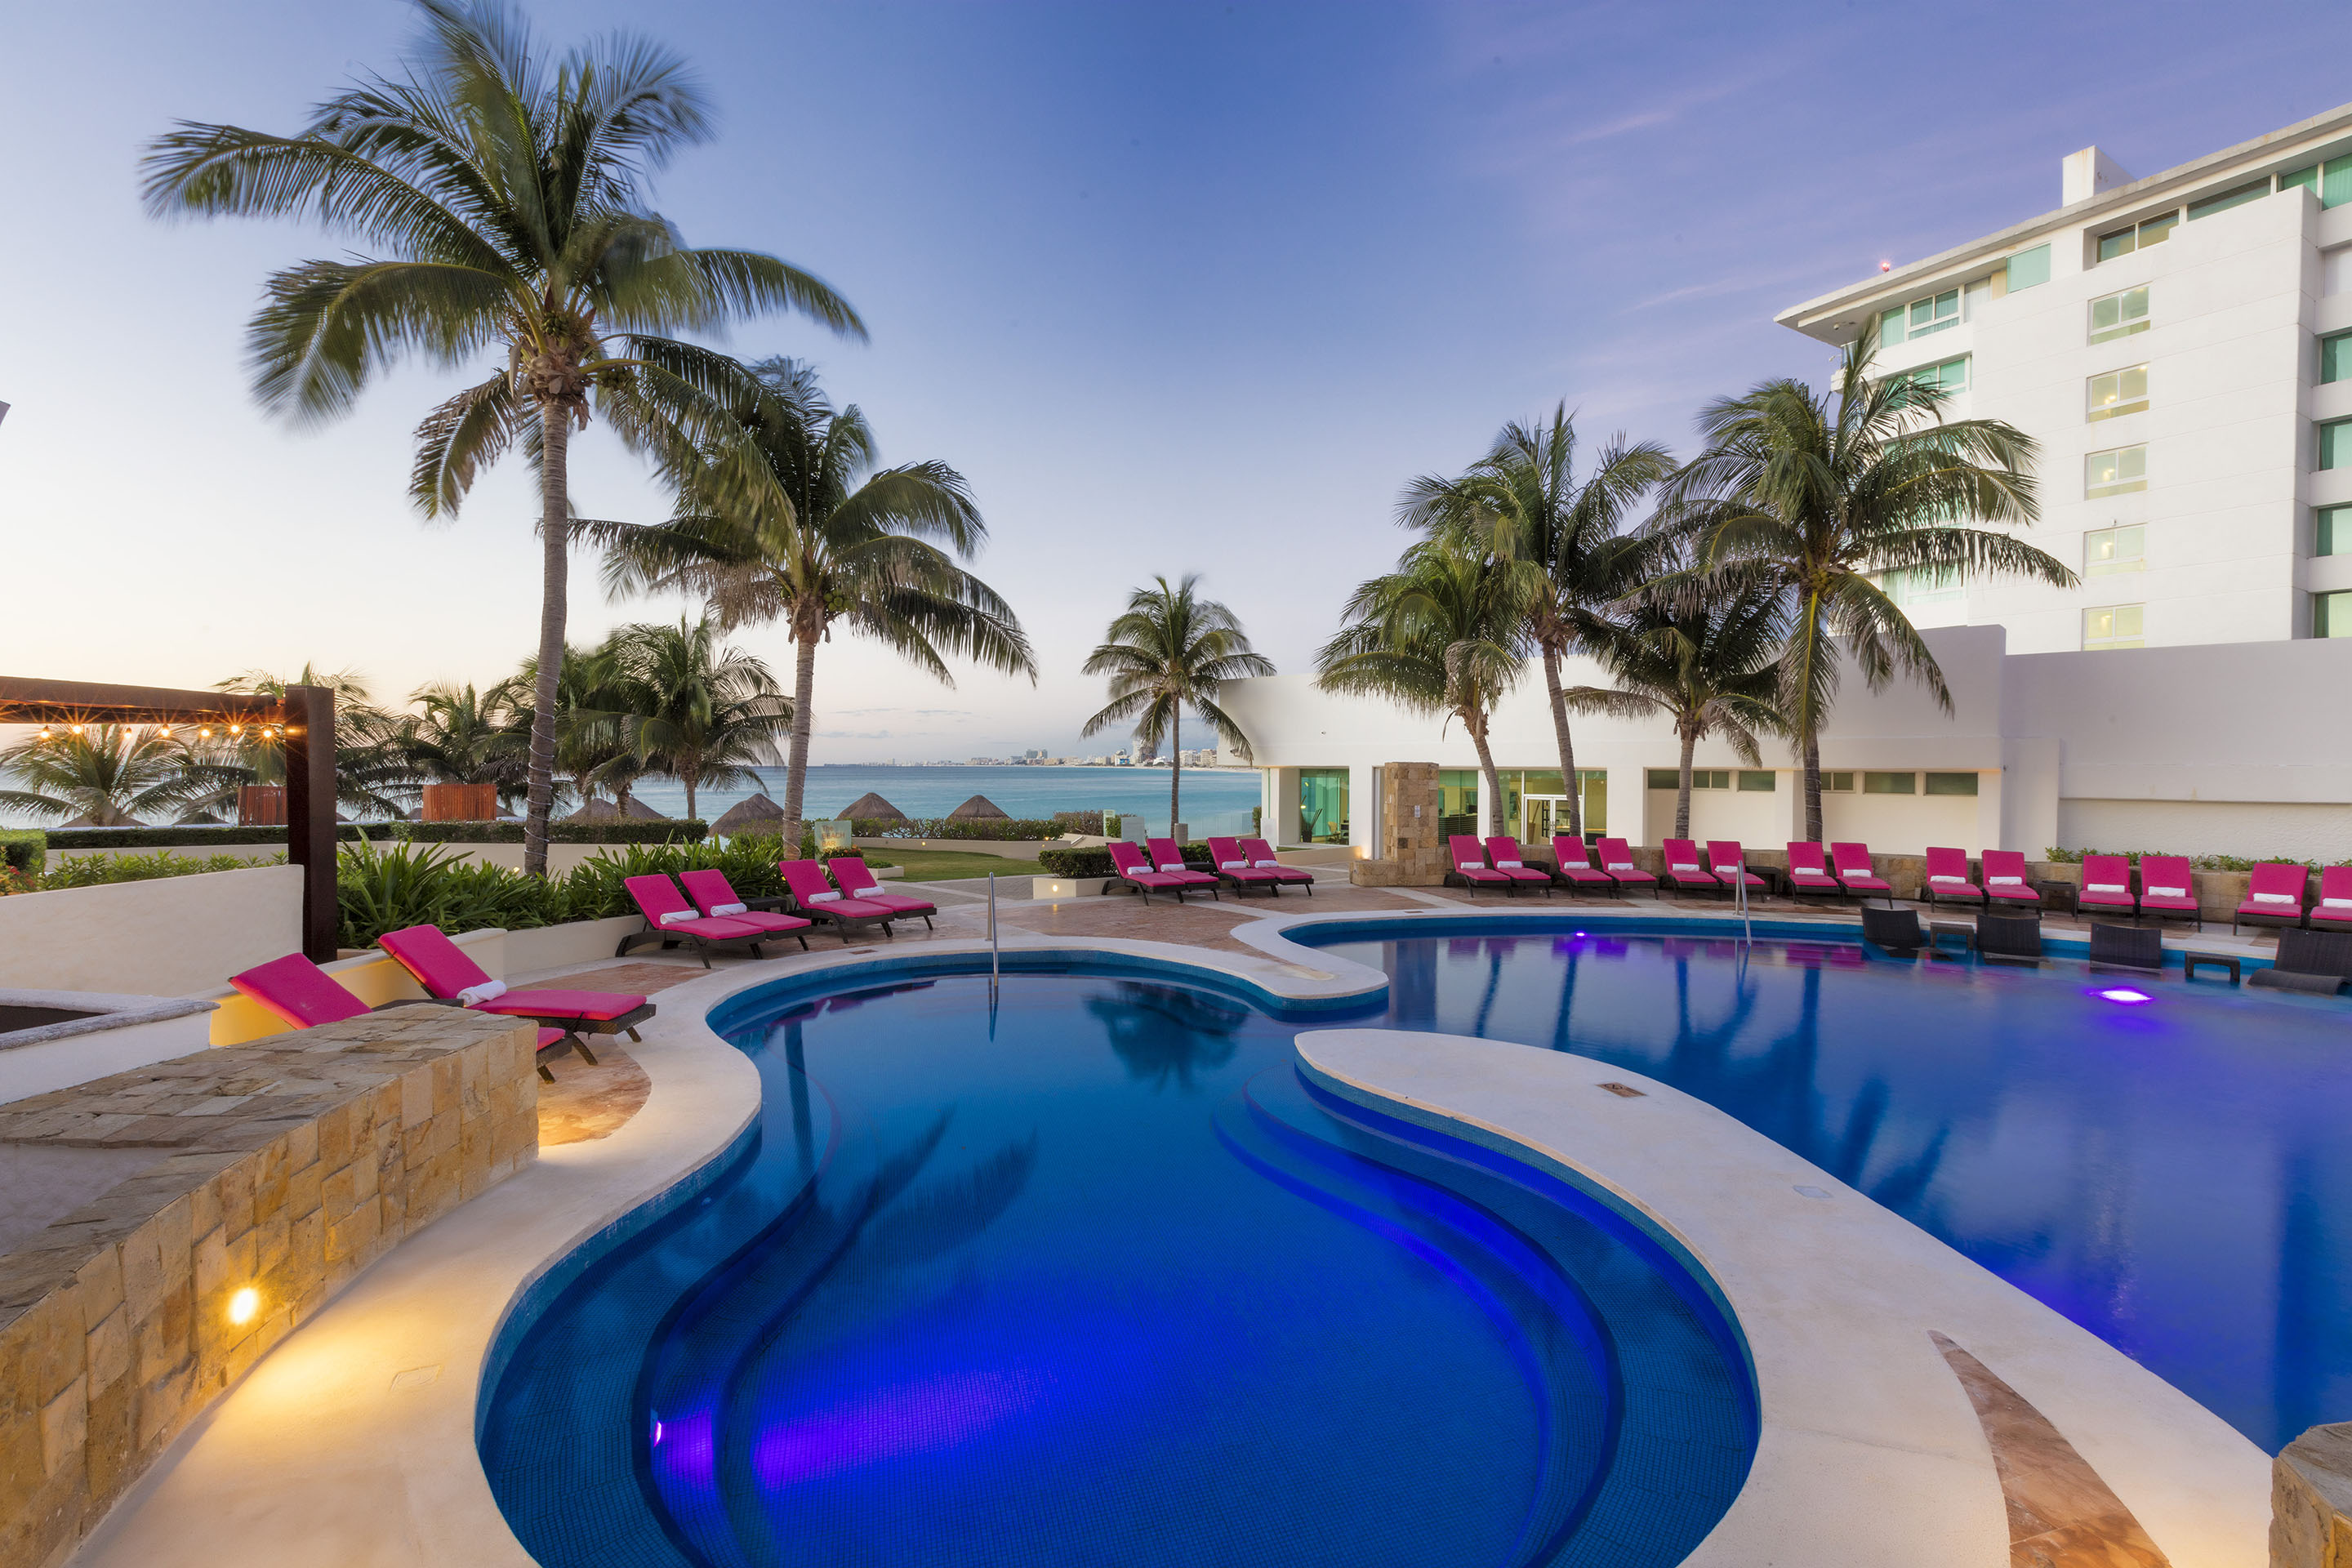 Krystal Grand Punta Cancun – Cancun – Krystal Grand Punta Cancun All